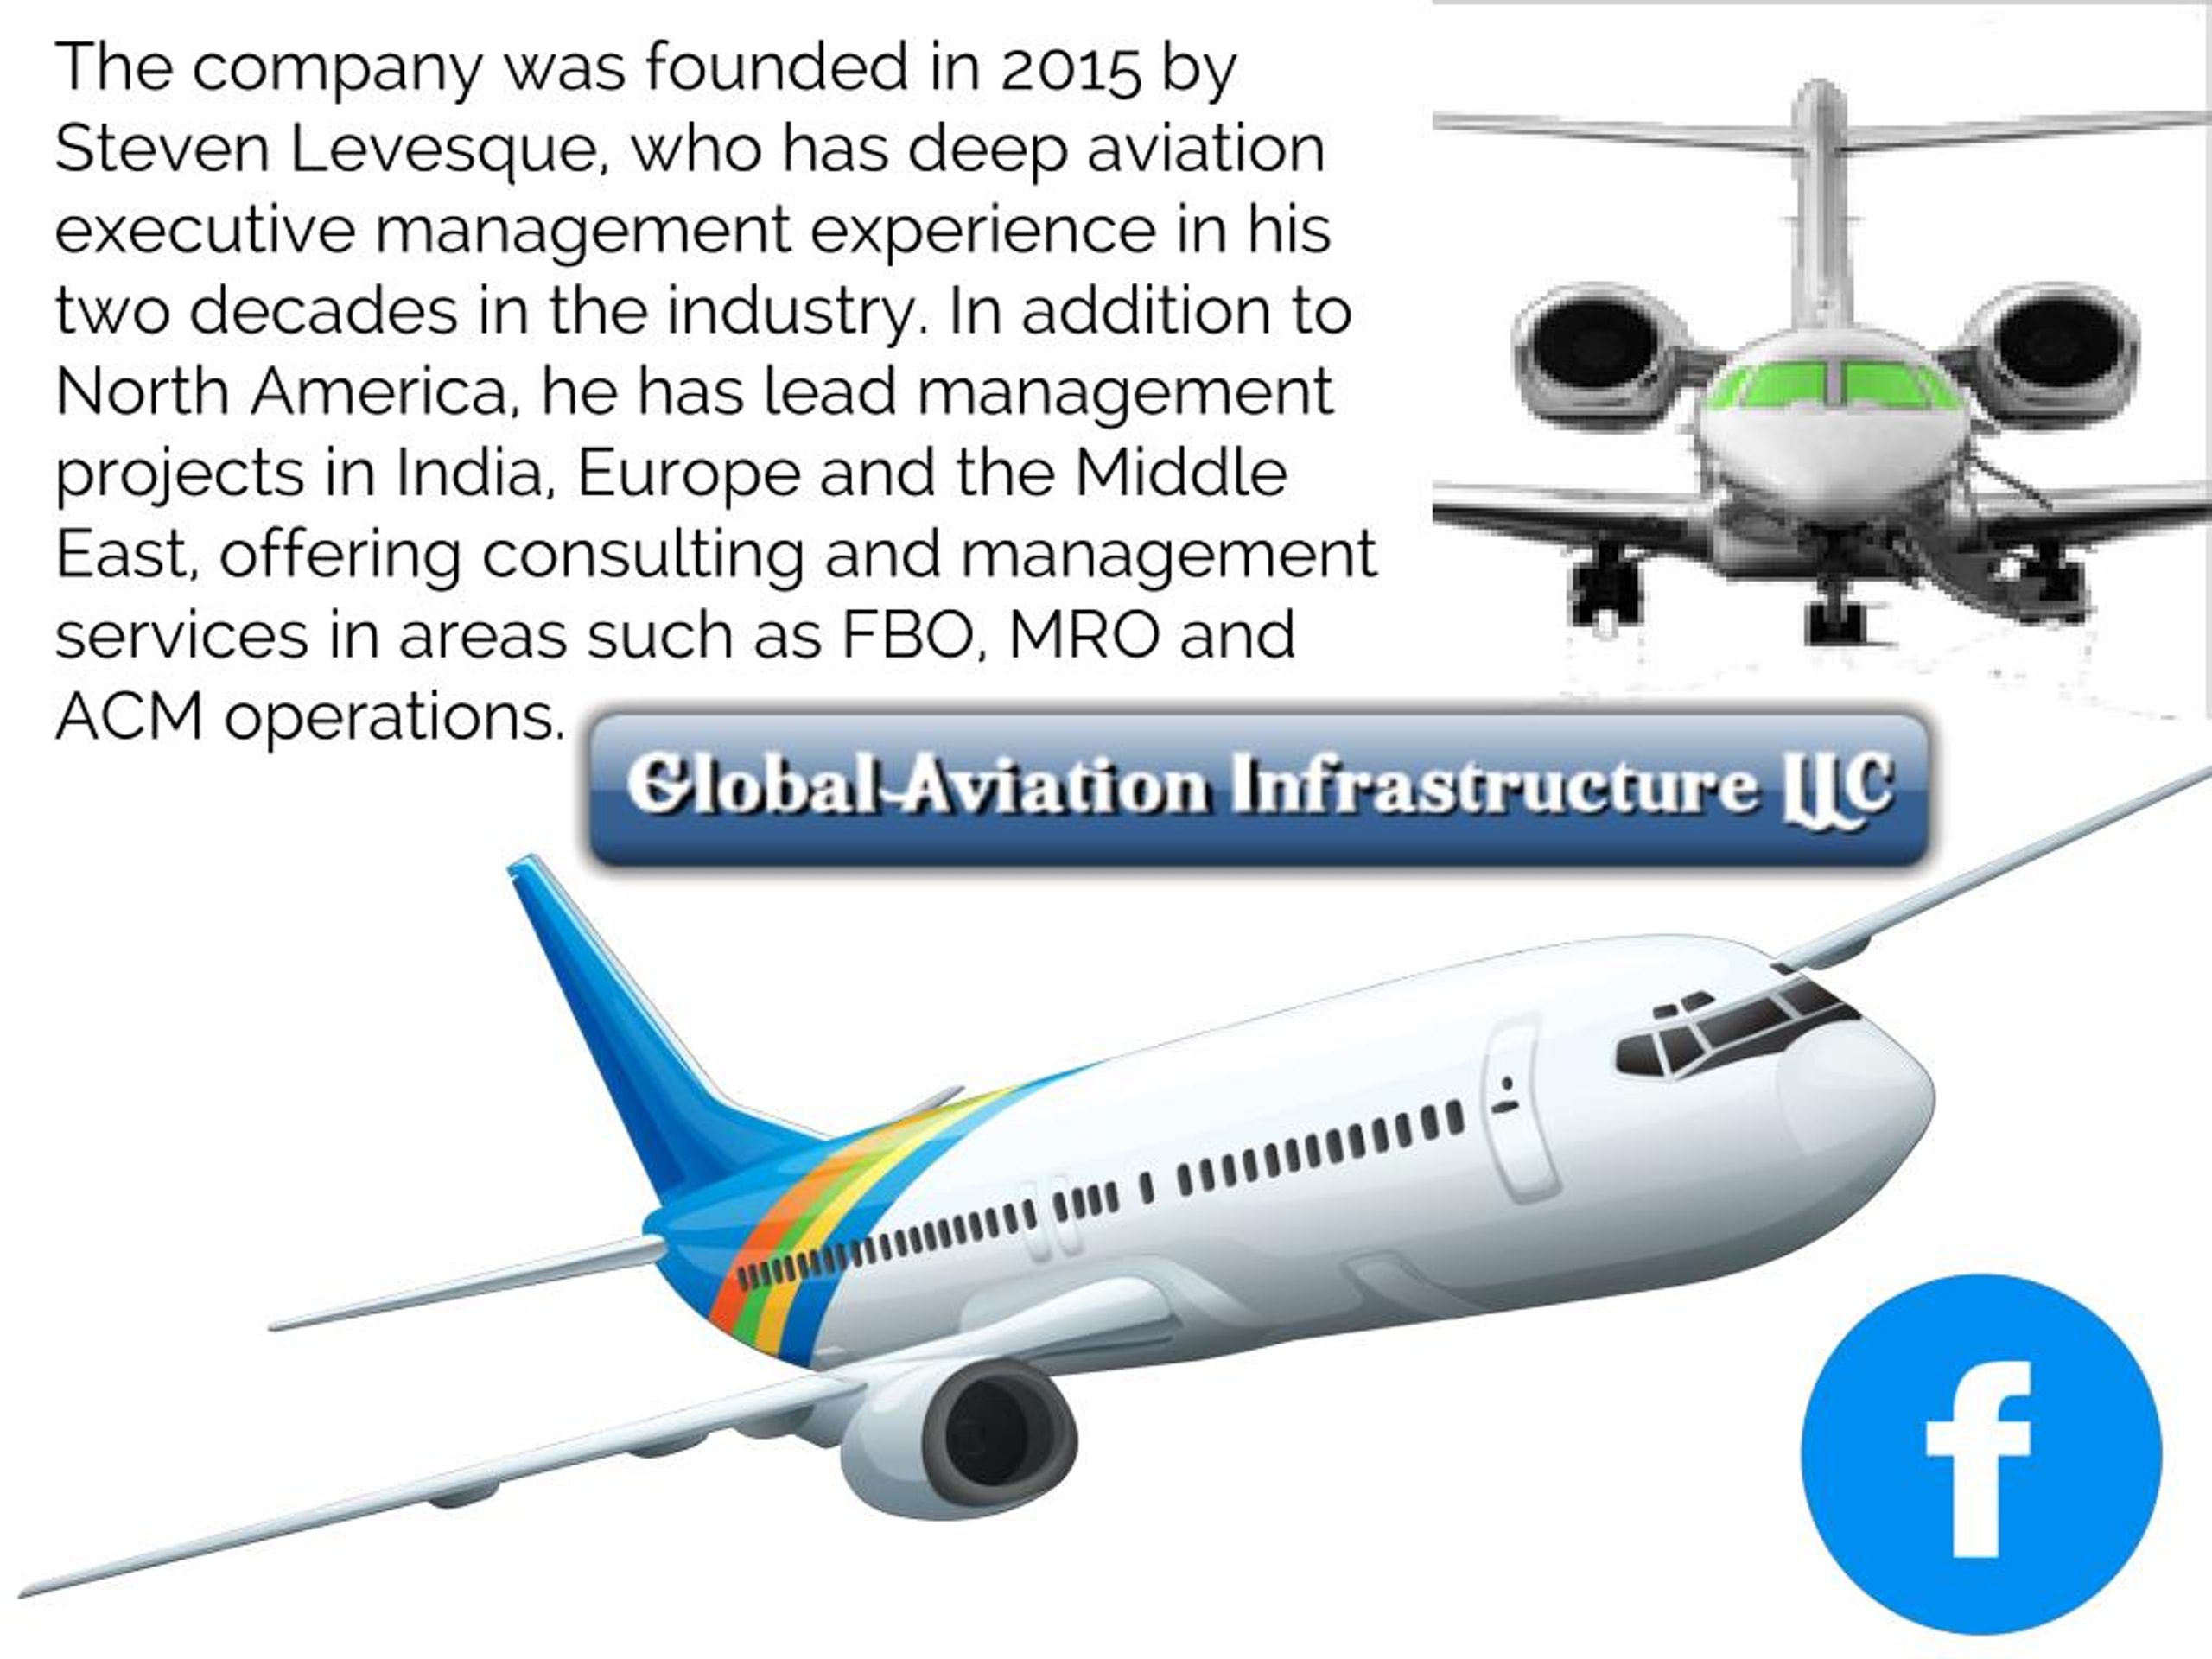 aviation mro business plan